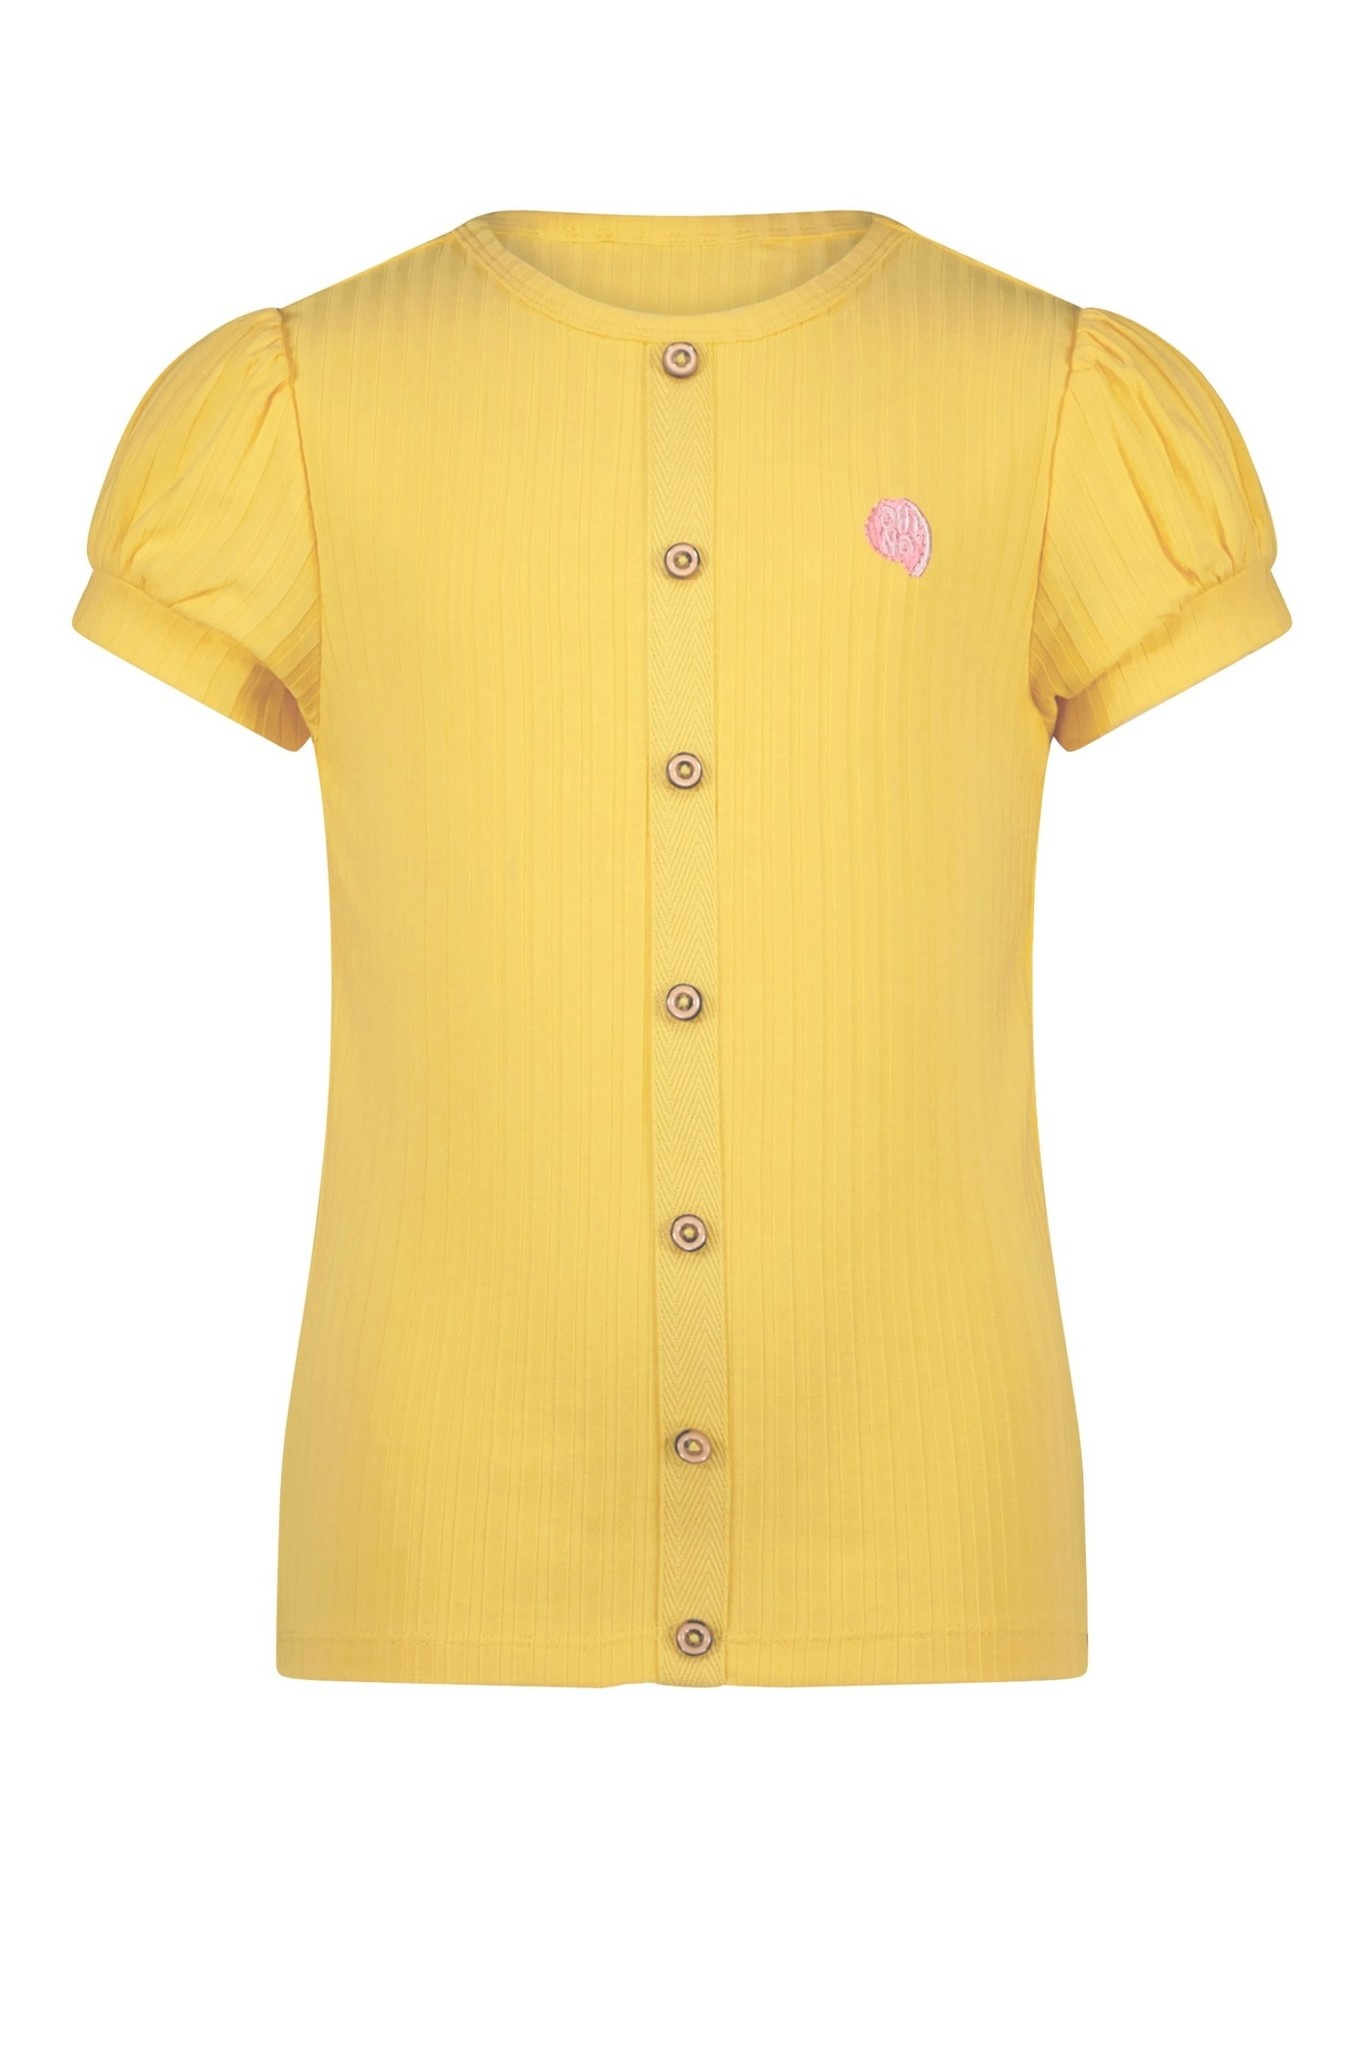 NONO - T-Shirt - Lemon Drop - Maat 134-140